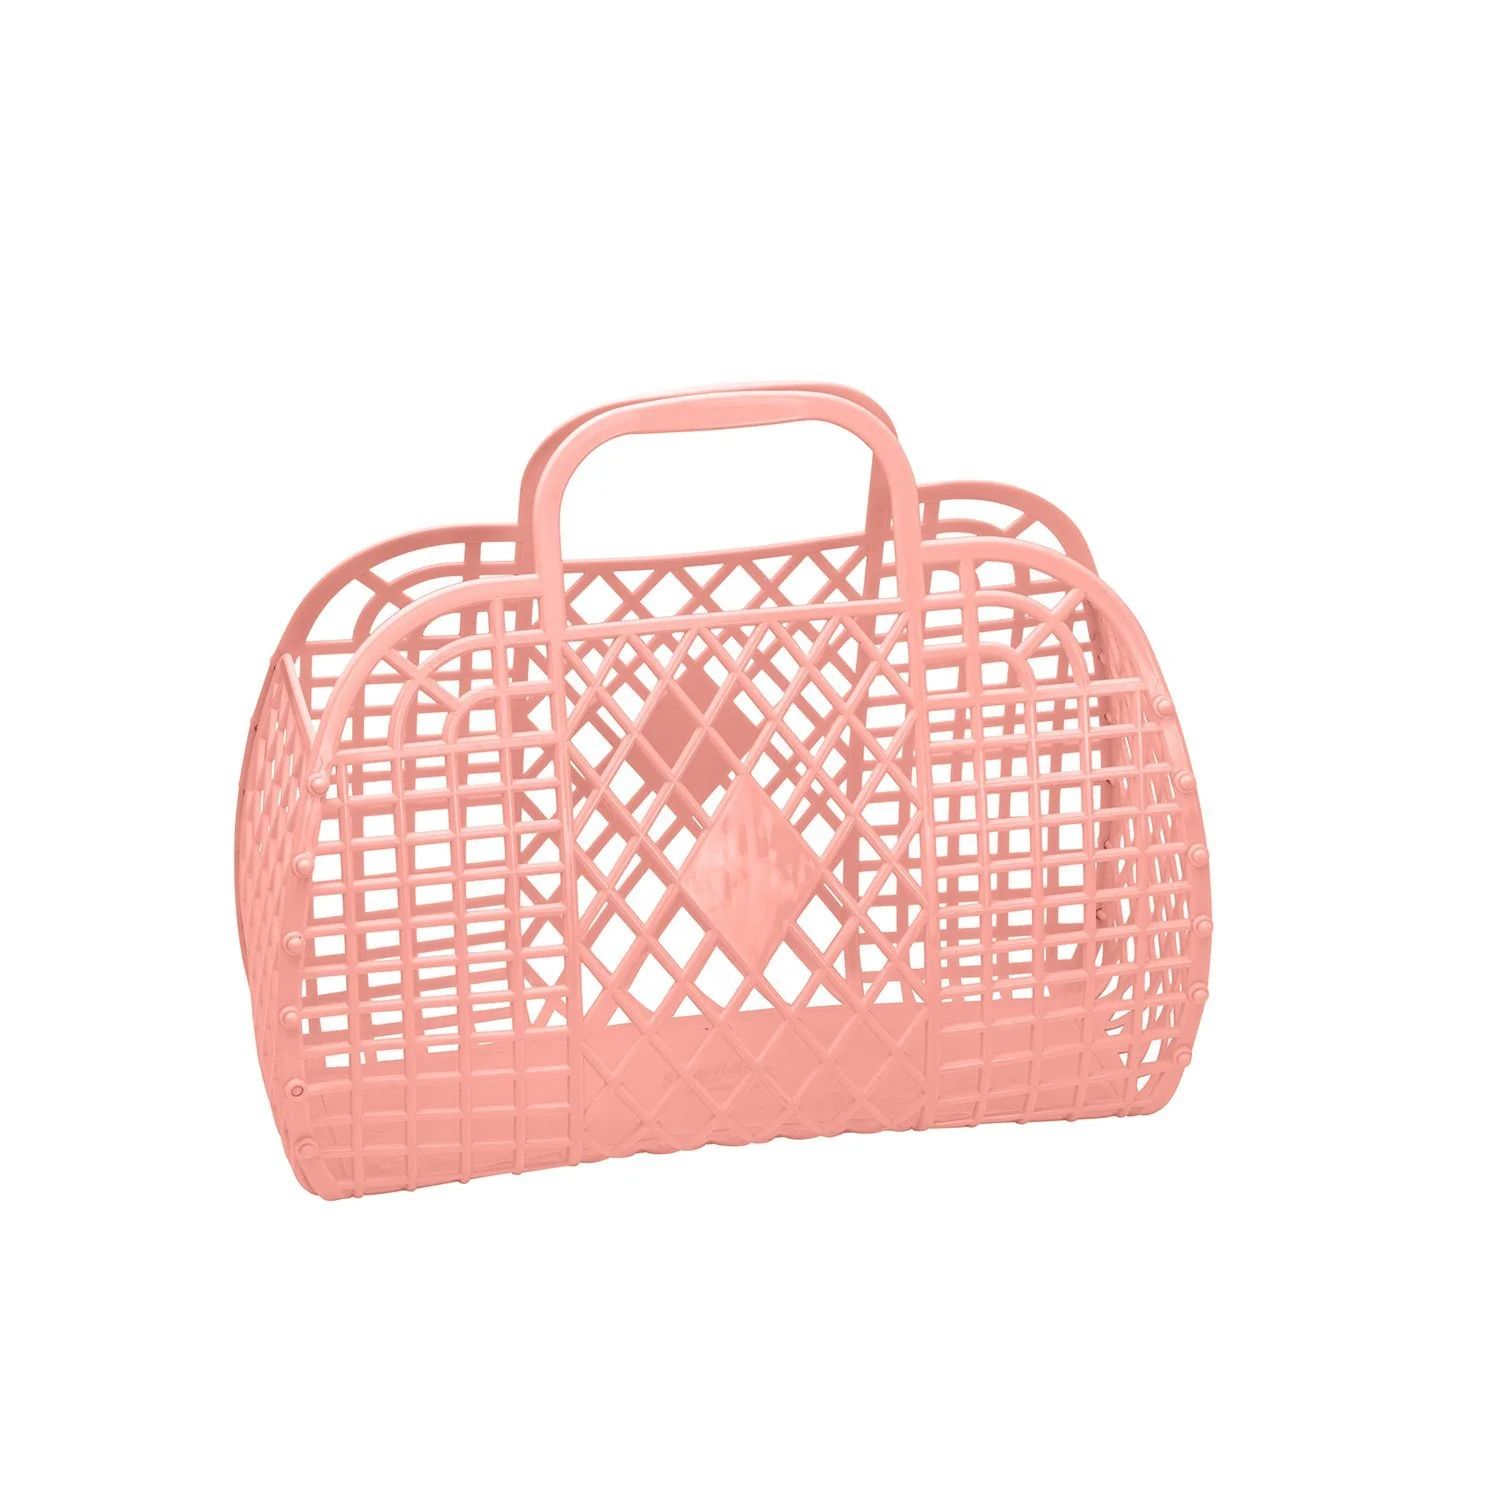 Retro Basket - Large Peach | Sun Jellies Women's handbag | Bohemian Mama